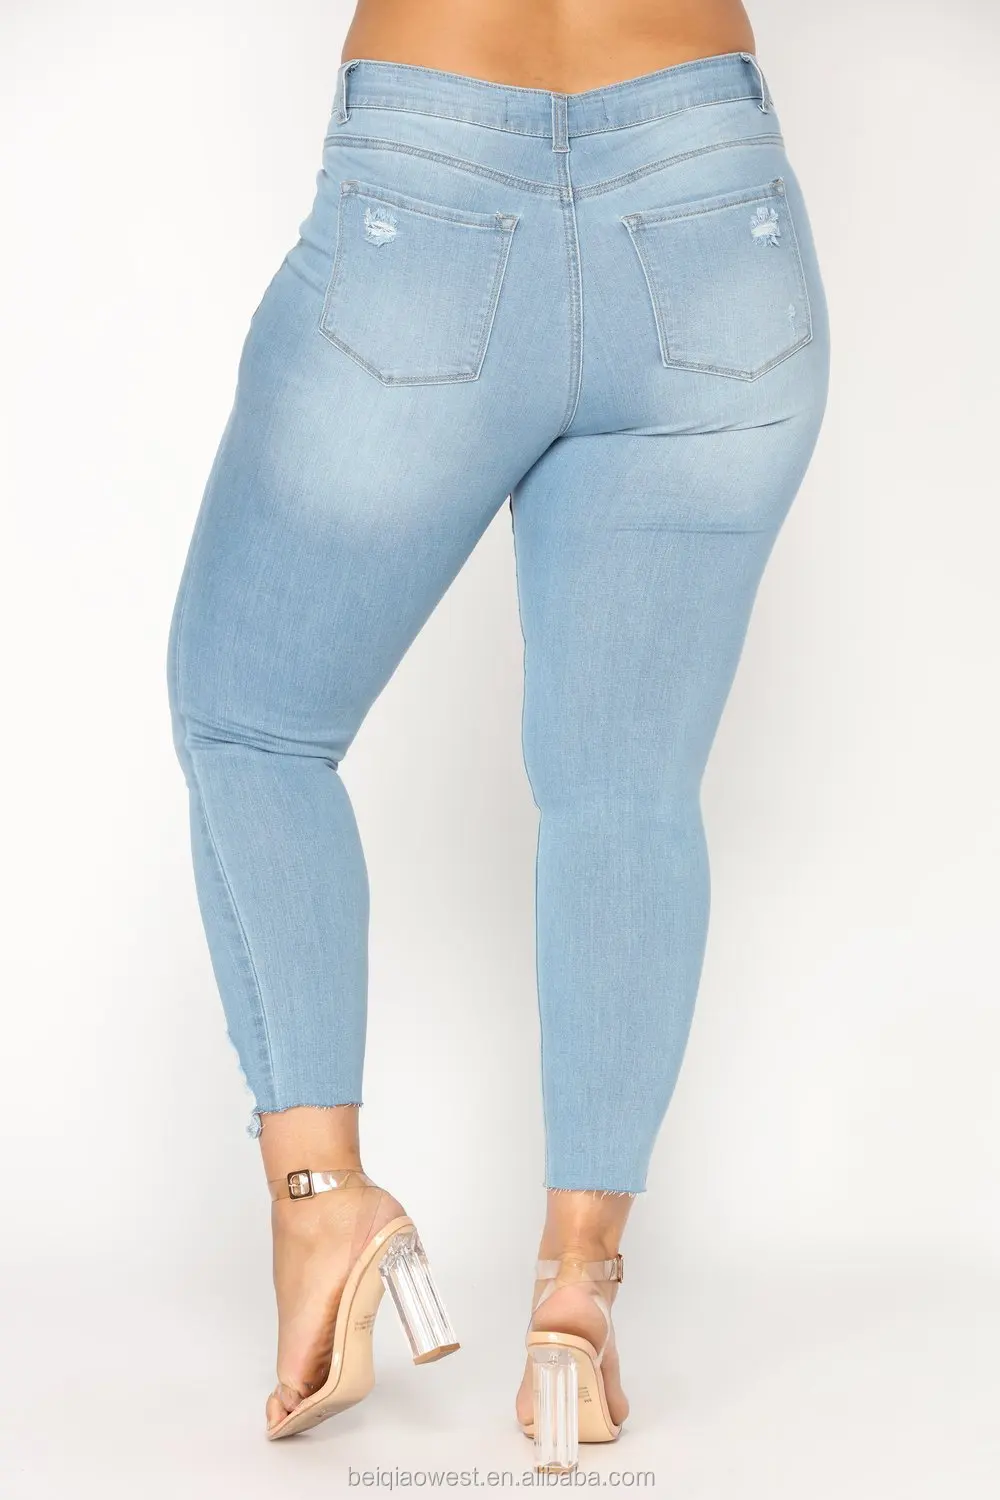 Wholesale Fashion Sexy Women Plus Size Colombian Butt Lift Jeans Hight